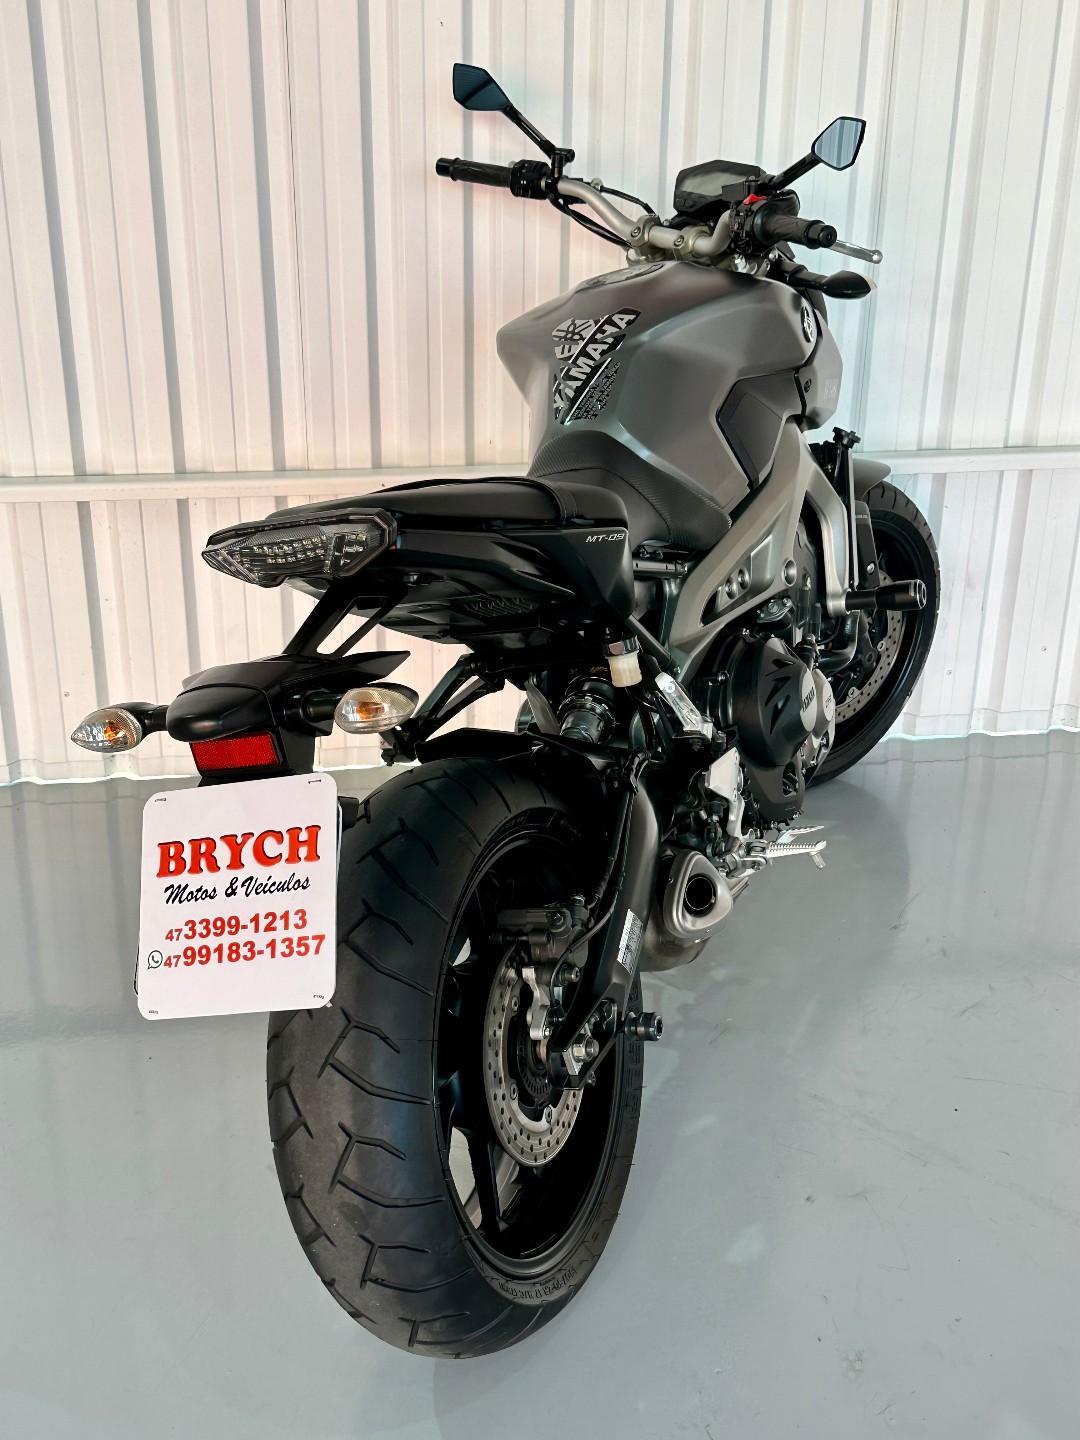 Yamaha MT-09 850cc ABS 2015